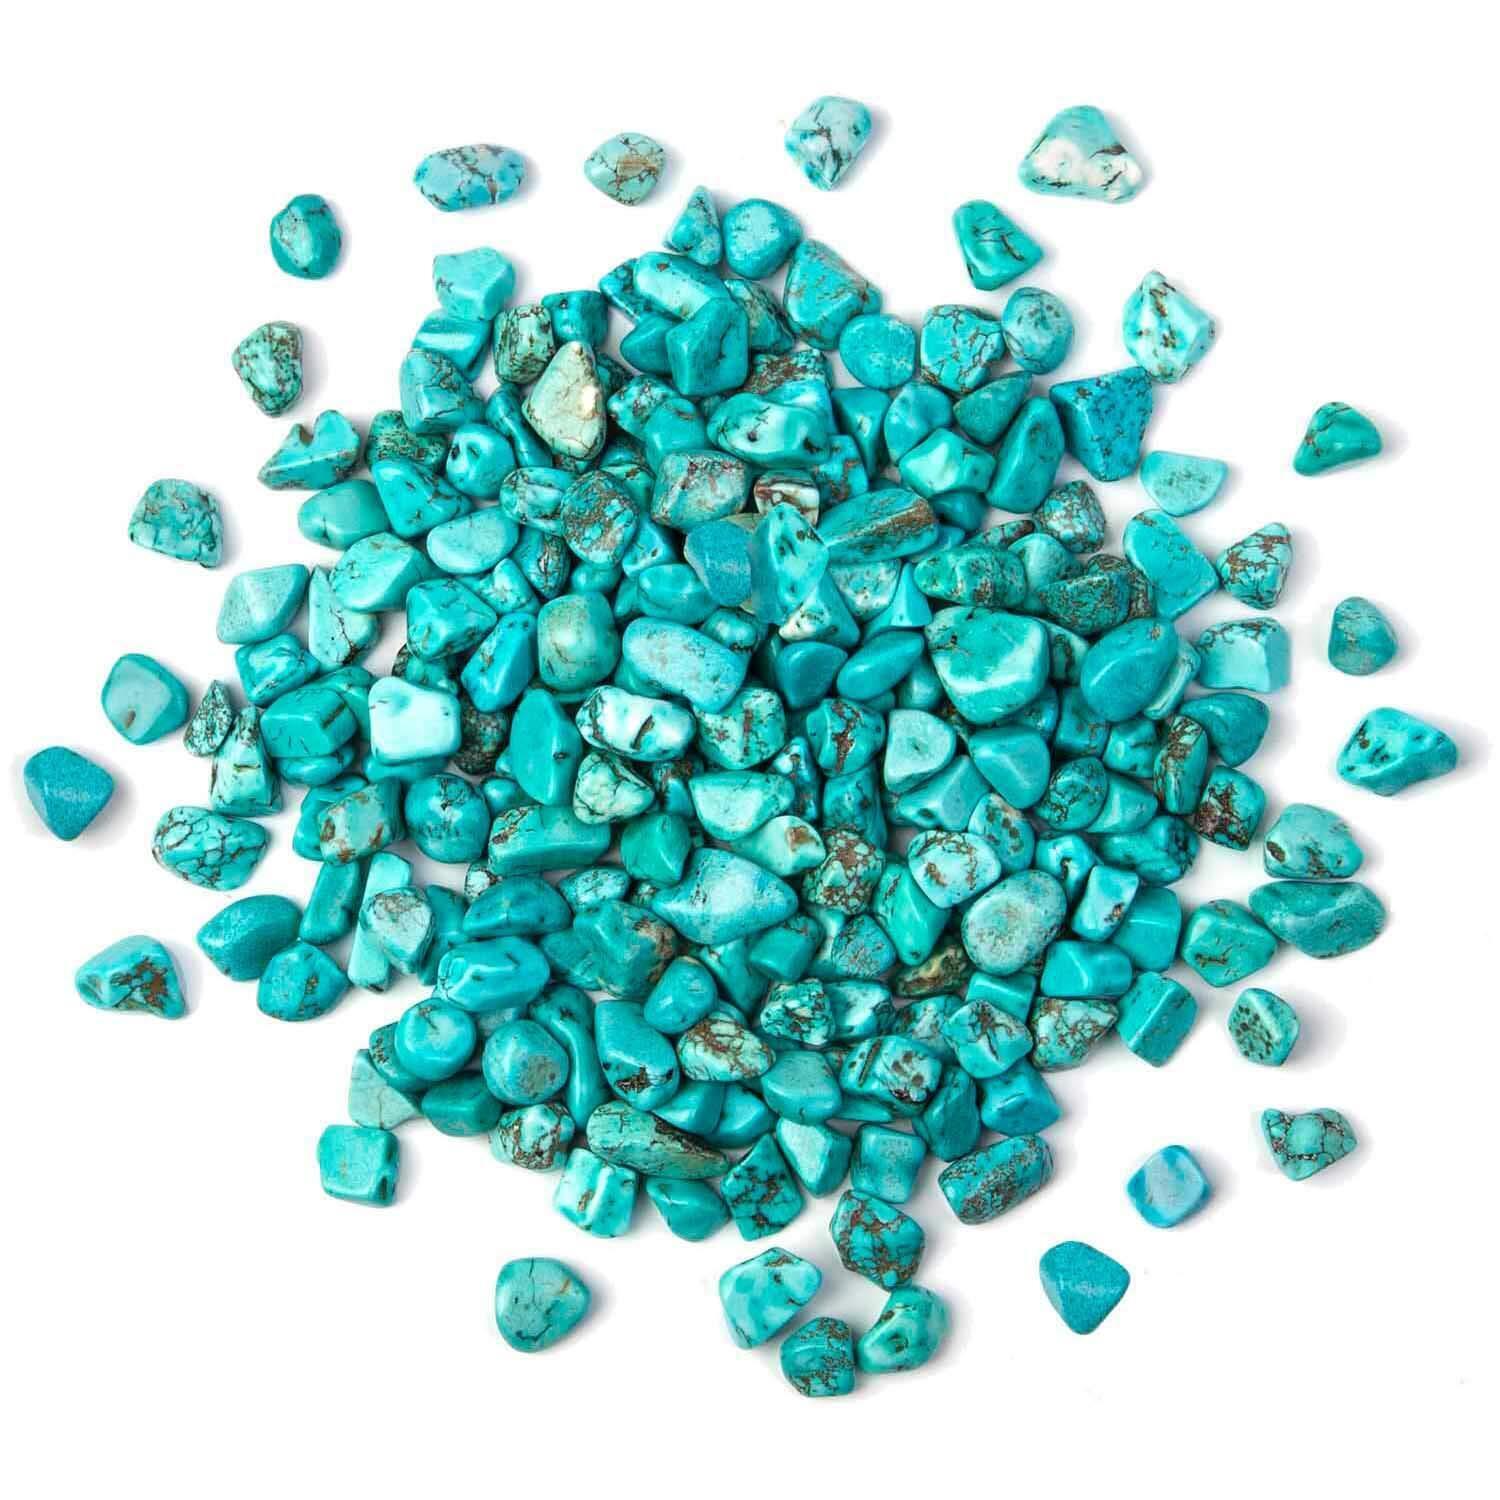 1LB Turquoise Small Tumbled Chips Crushed Stone Bulk Crystal Healing Decor